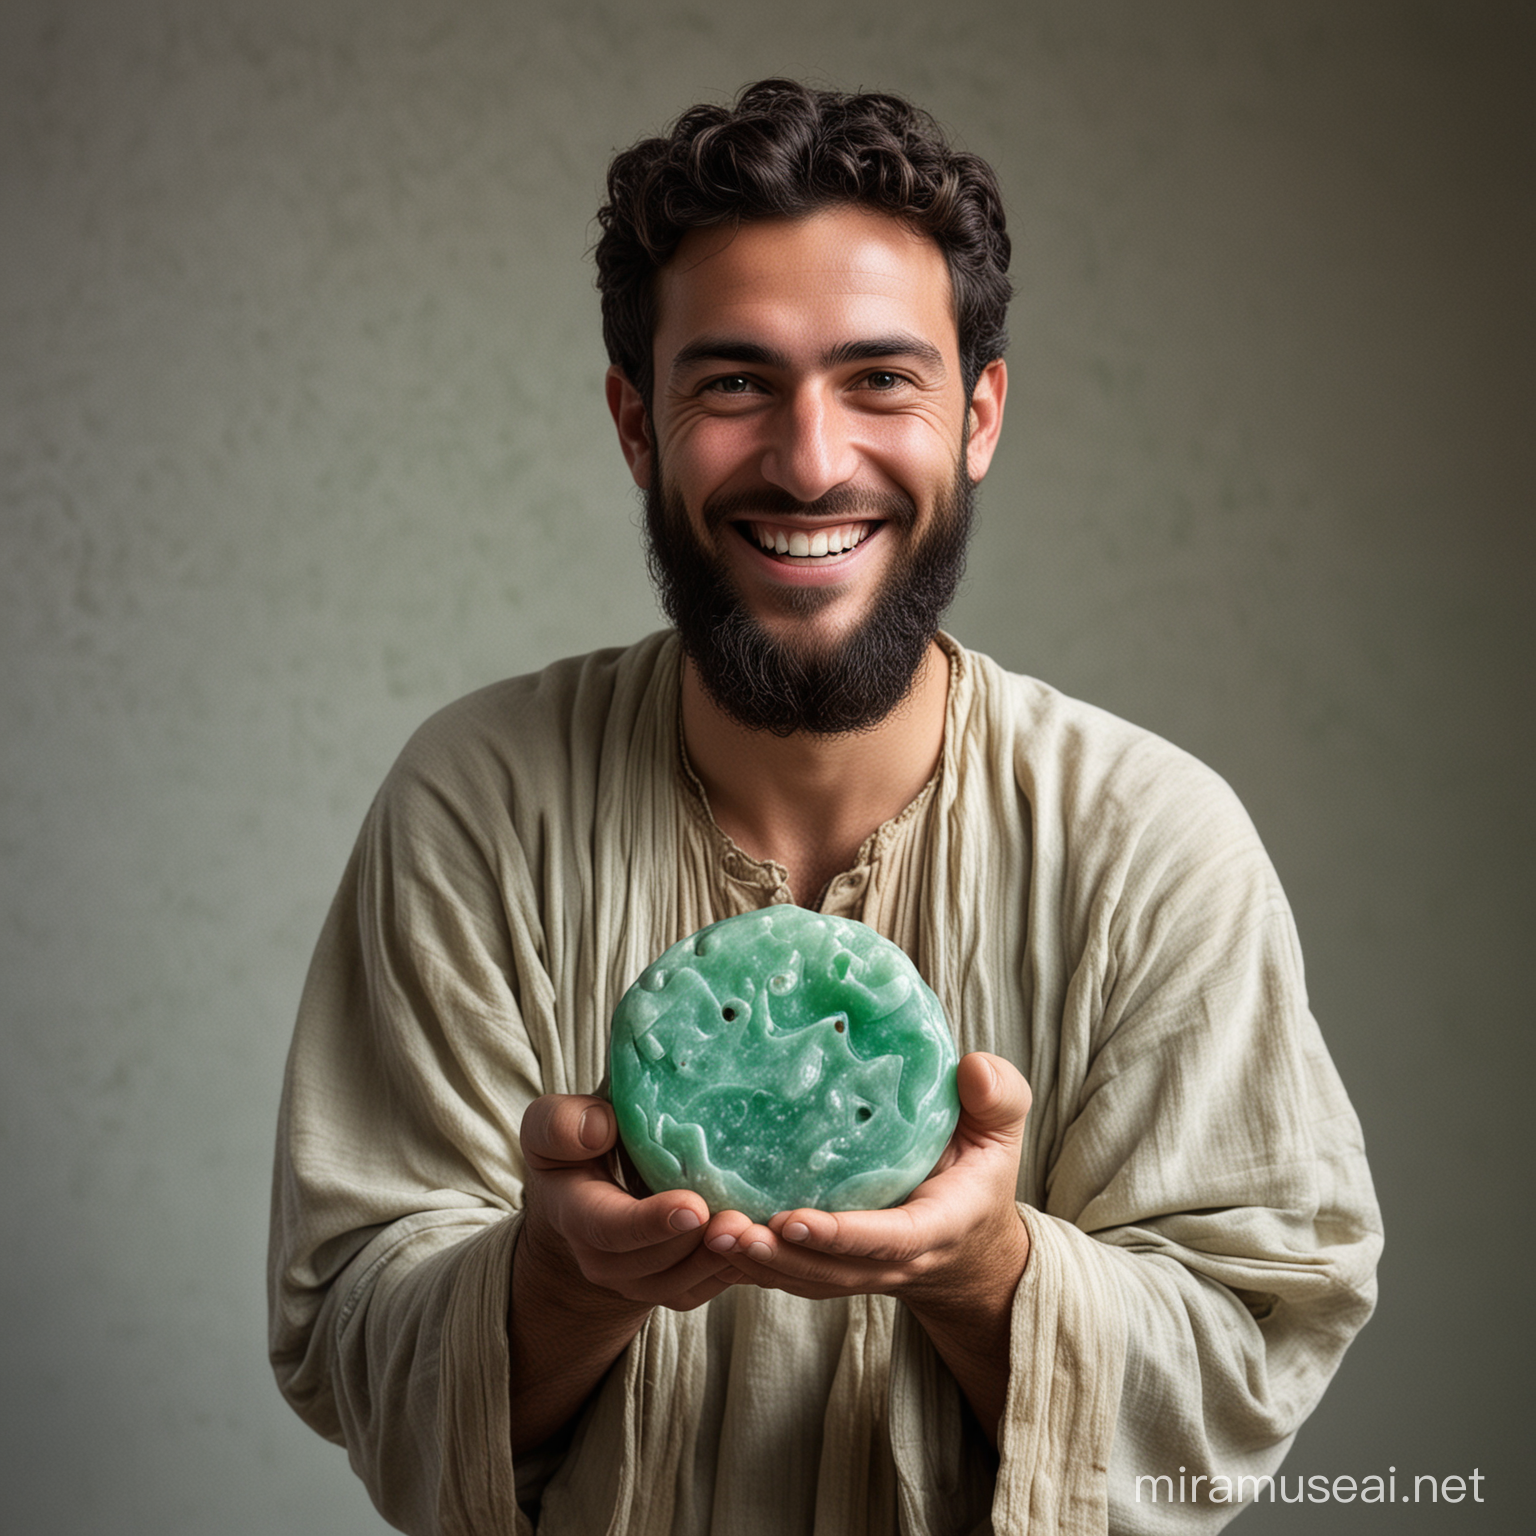 Smiling Jewish Man Holding Jadeite Stone 7th Century BCE